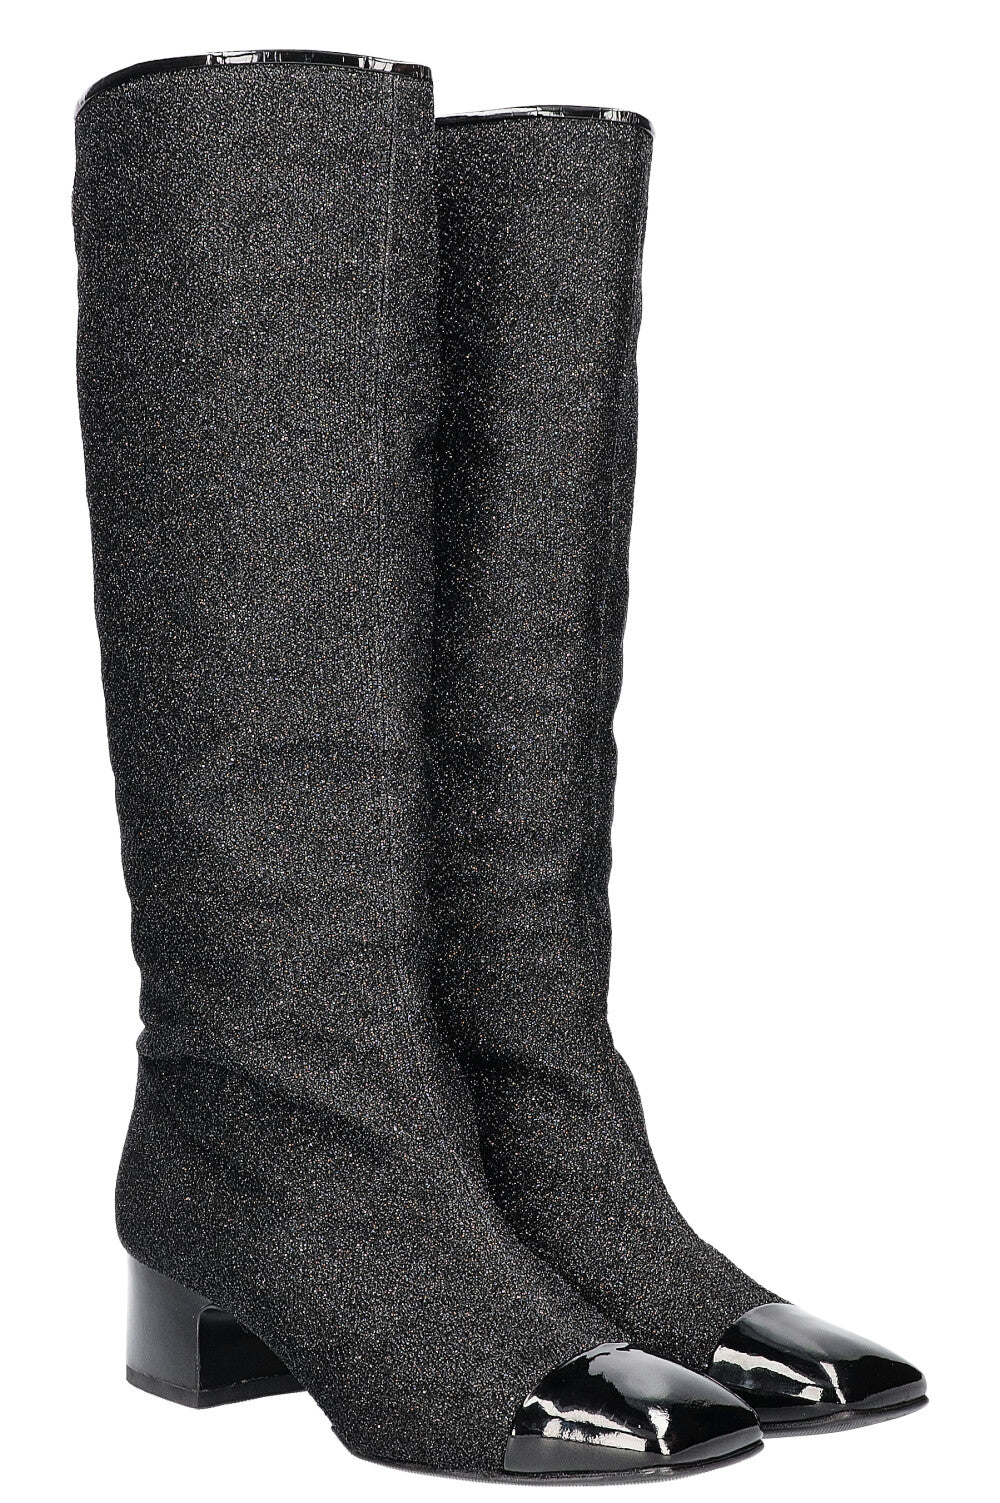 CHANEL Glitter Boots Black FW17$